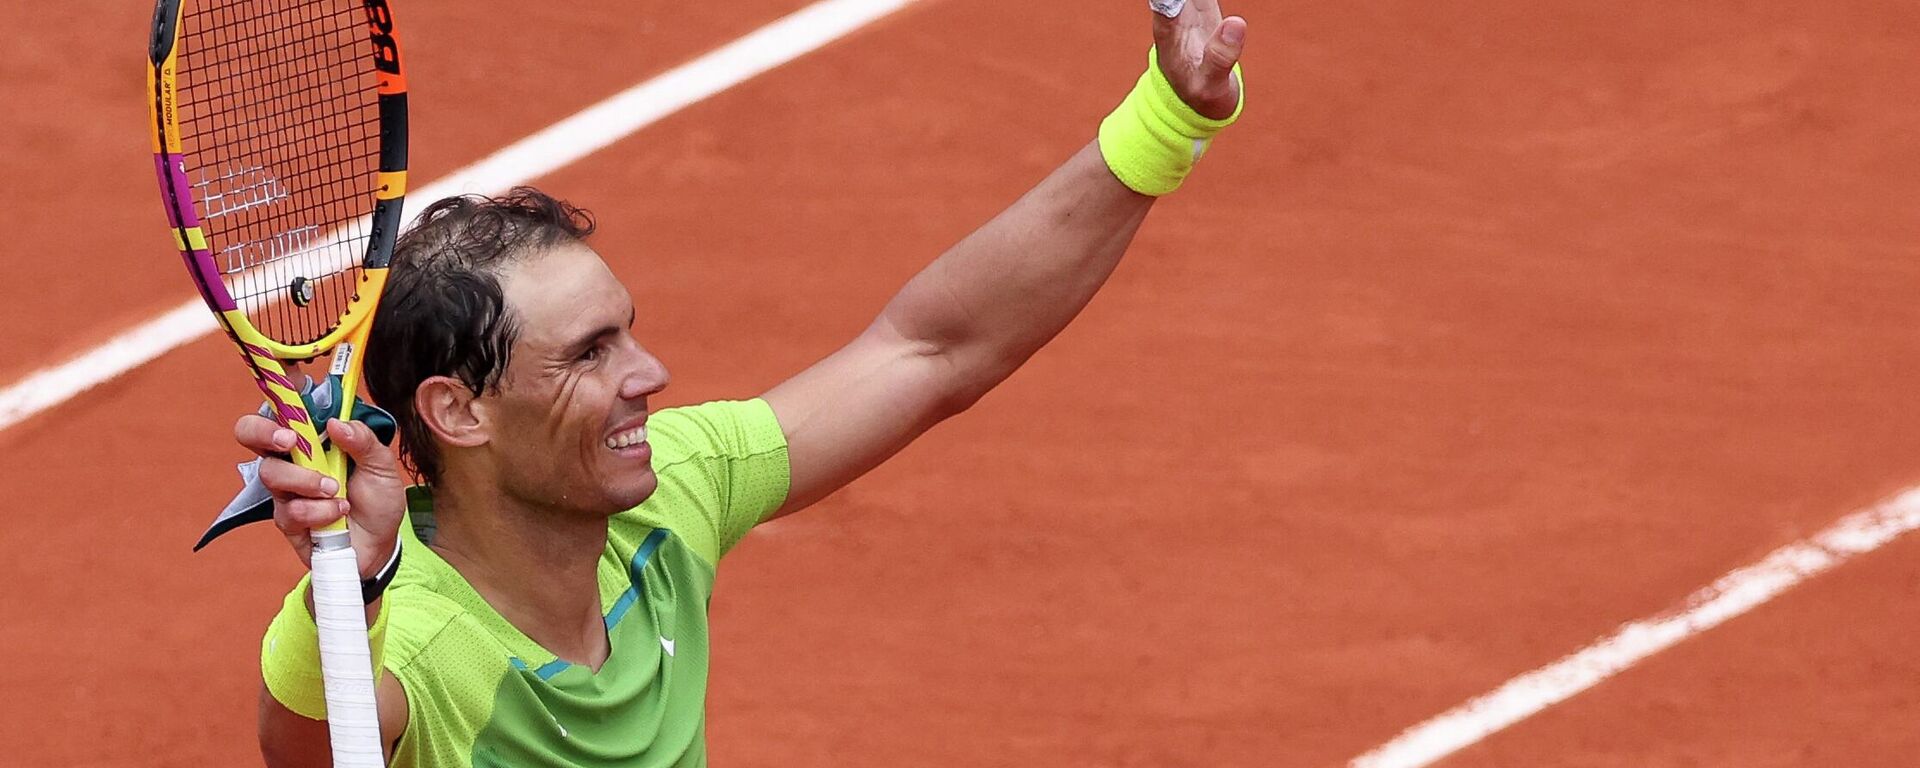 El tenista español Rafael Nadal tras derrotar al australiano Jordan Thompson en Roland Garros 2022 - Sputnik Mundo, 1920, 23.05.2022